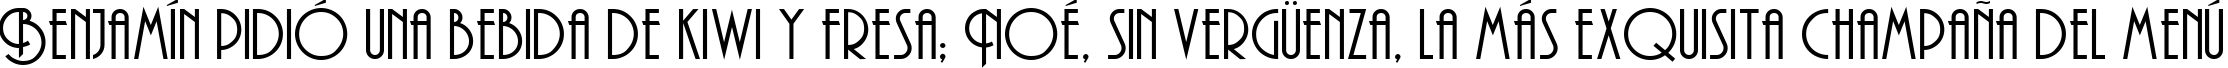 Пример написания шрифтом Andes текста на испанском